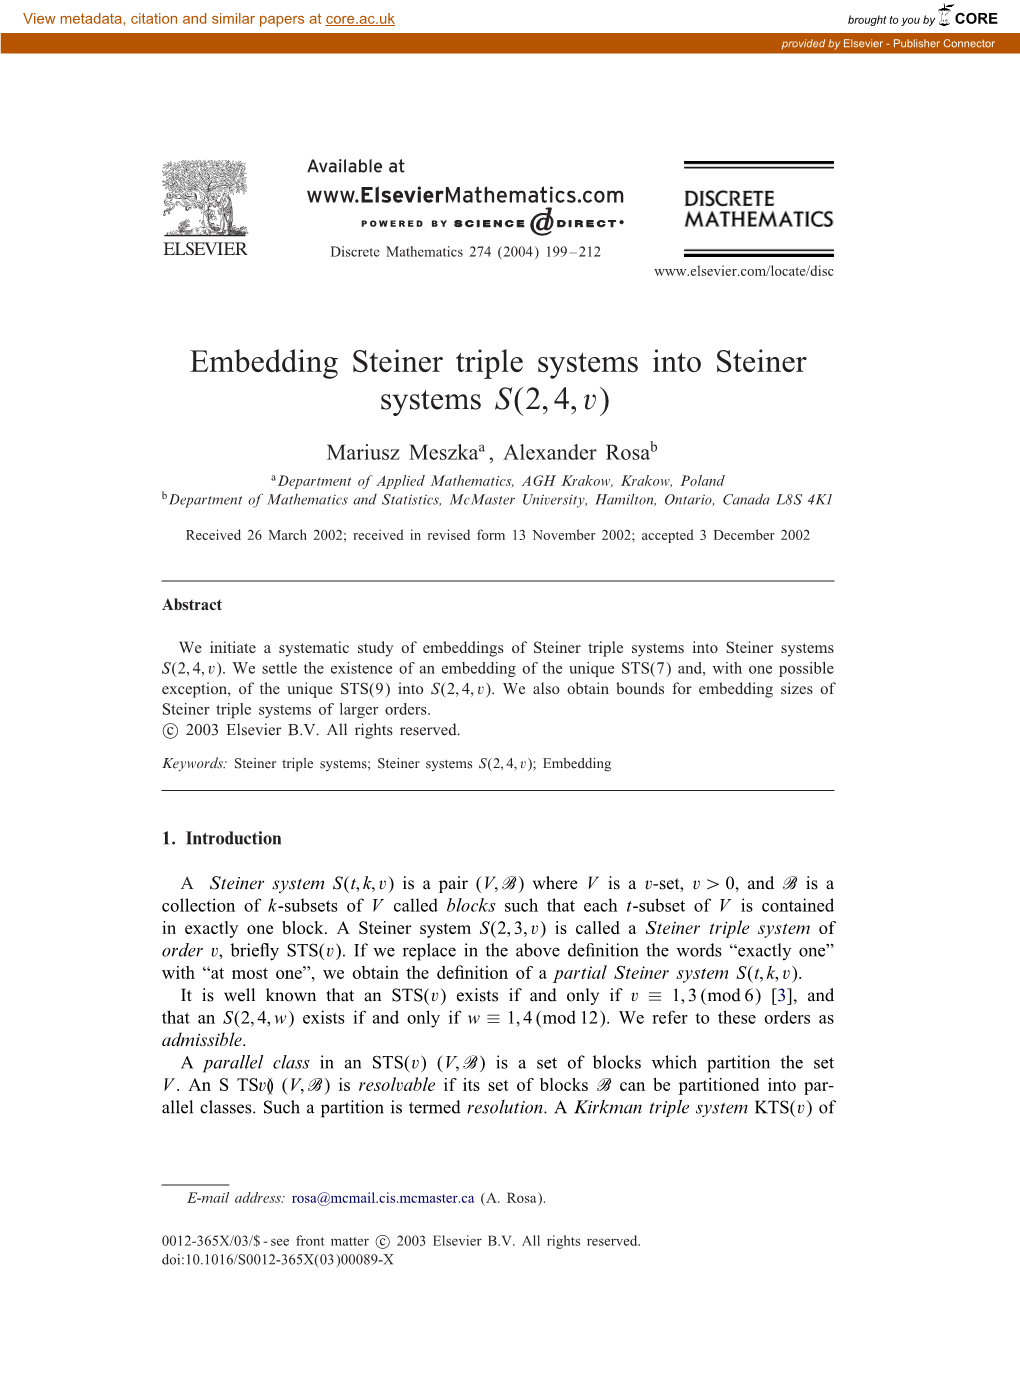 Embedding Steiner Triple Systems Into Steiner Systems S(2;4;V)